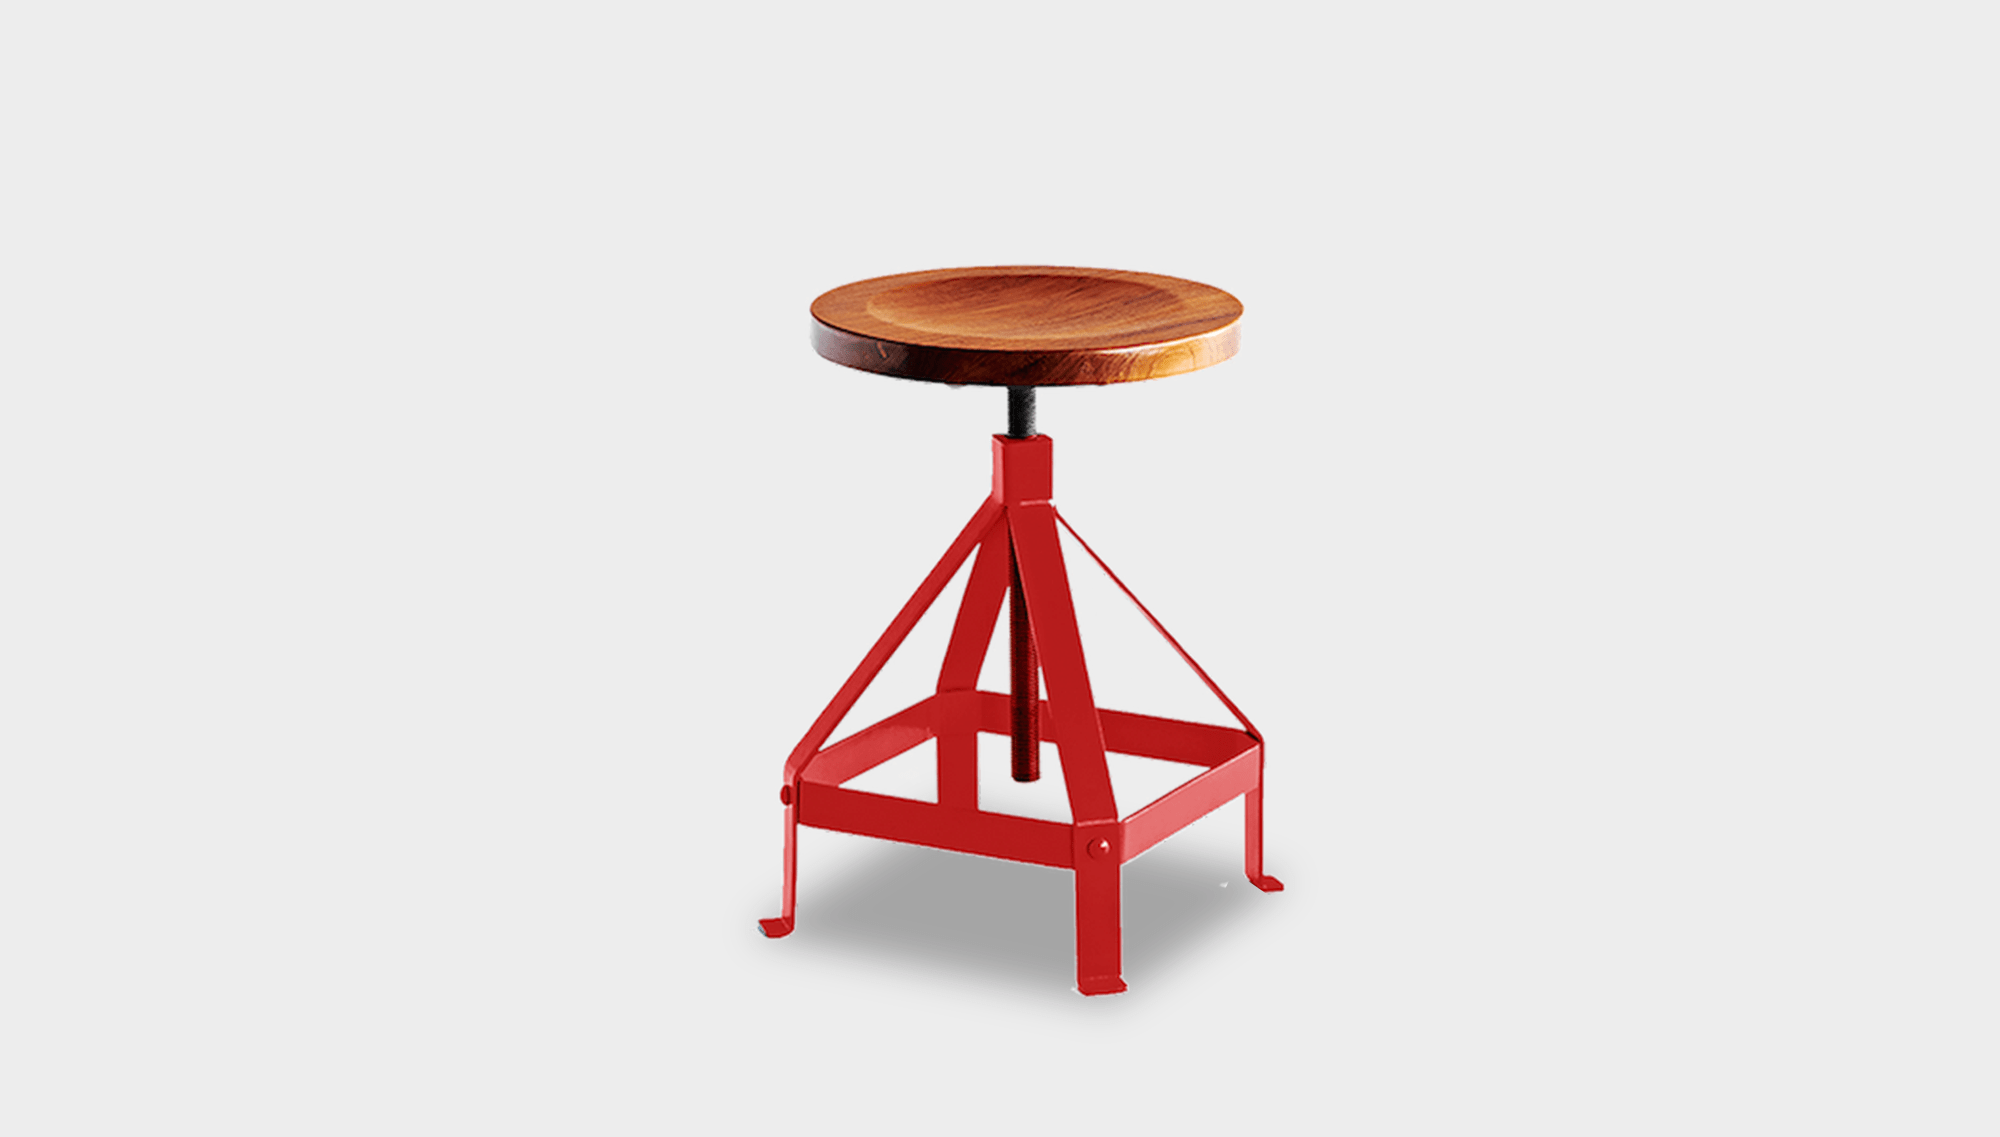 reddie-raw stool 35dia x 45-62H *cm / Wood Teak~Natural / Metal~Red Suzy Adjustable Stool